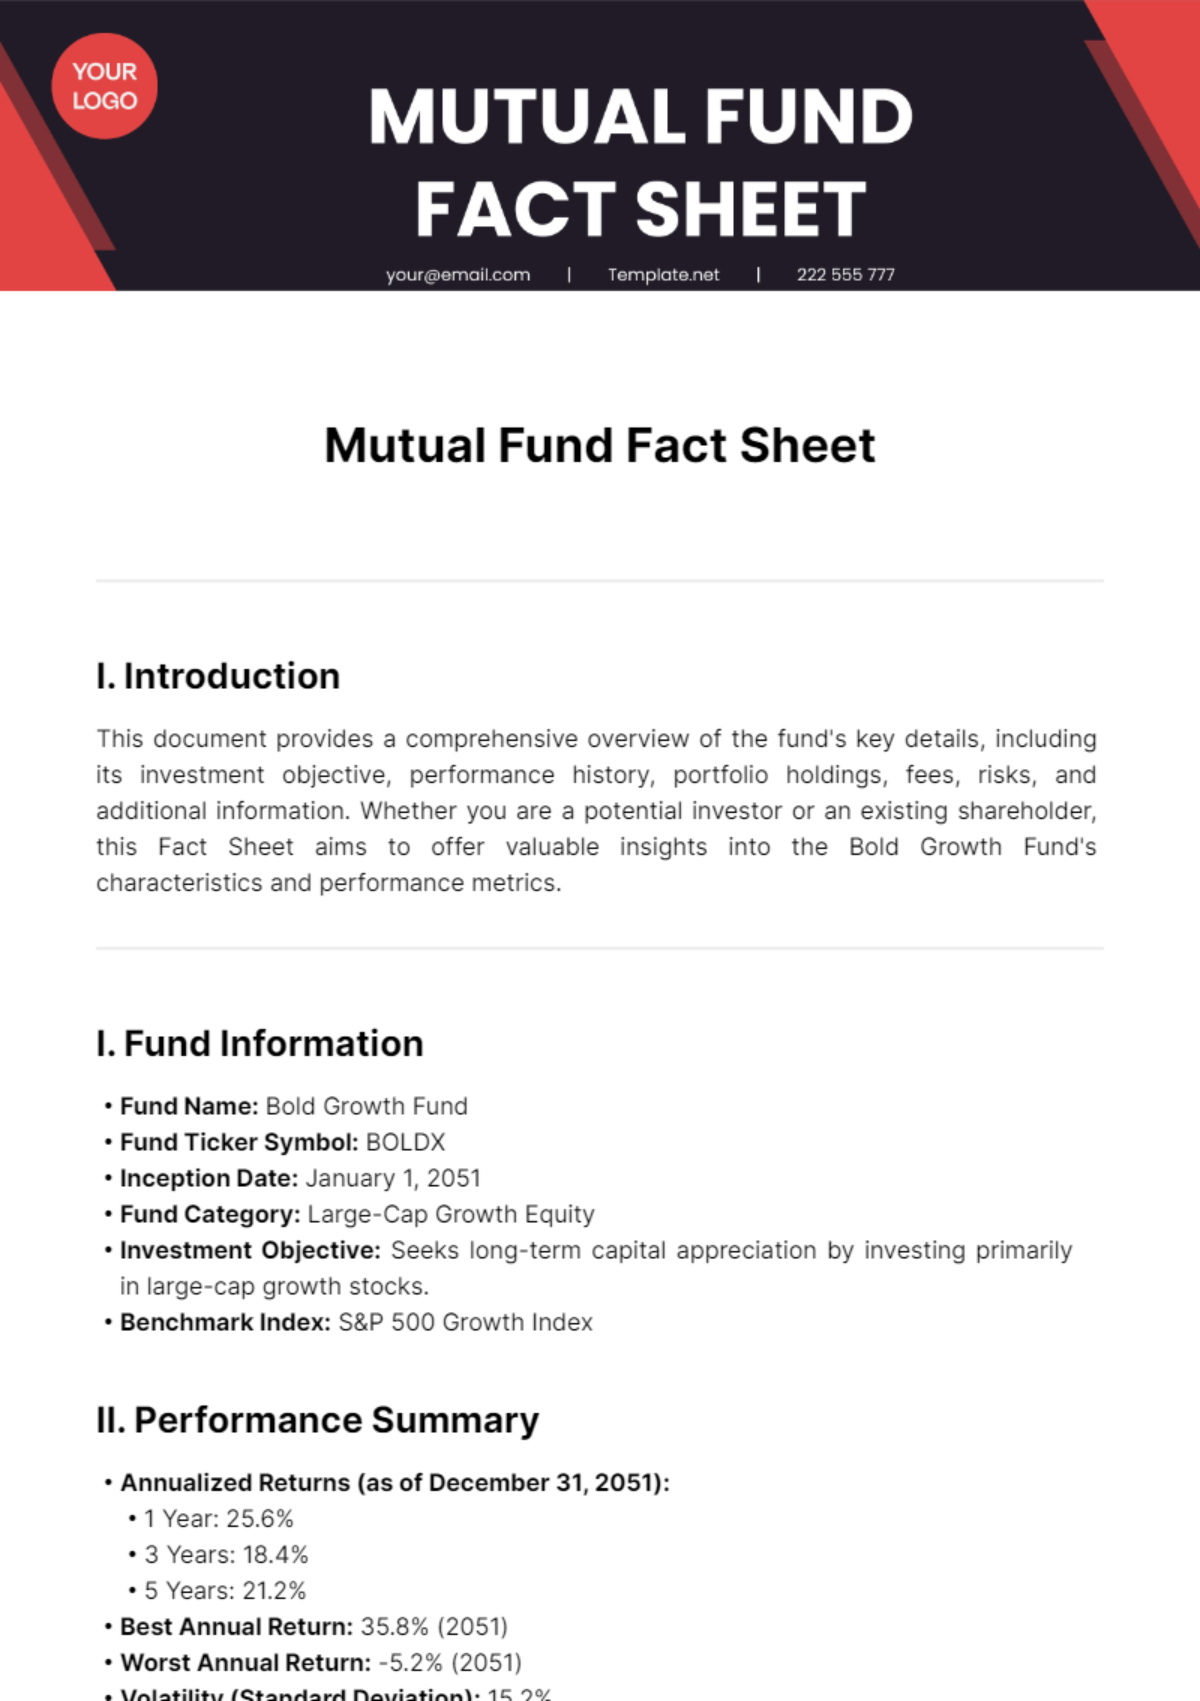 Mutual Fund Fact Sheet Template